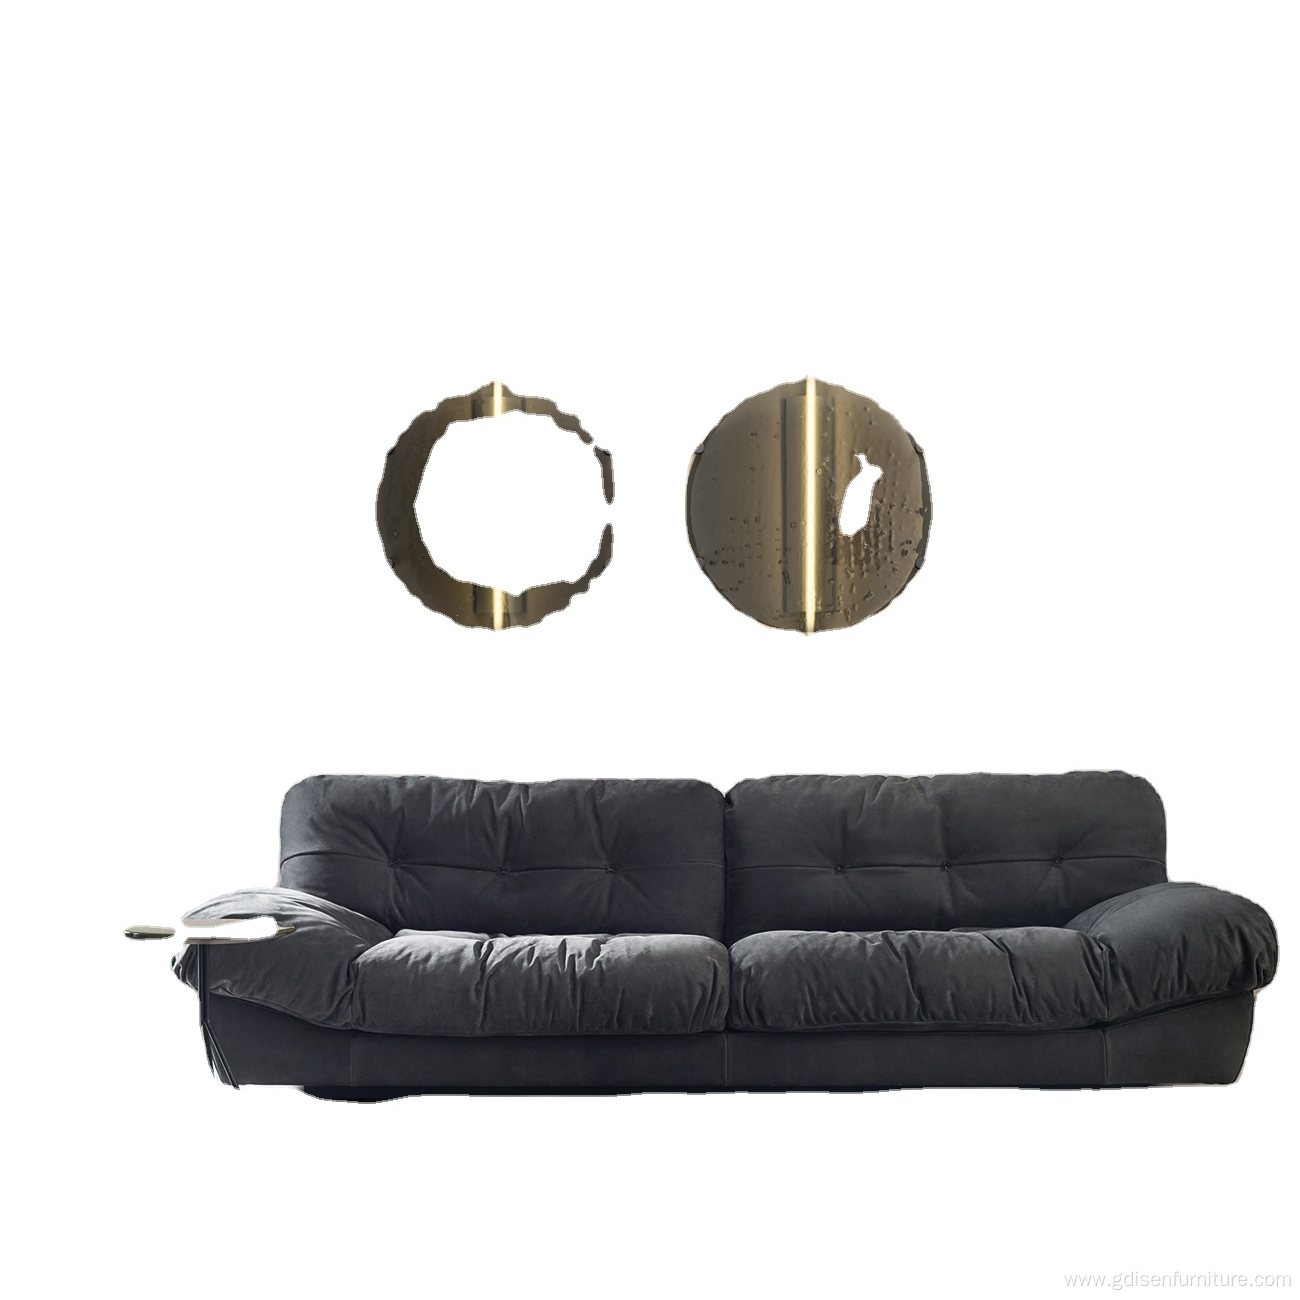 Modern leather milan sofa for living room furniture